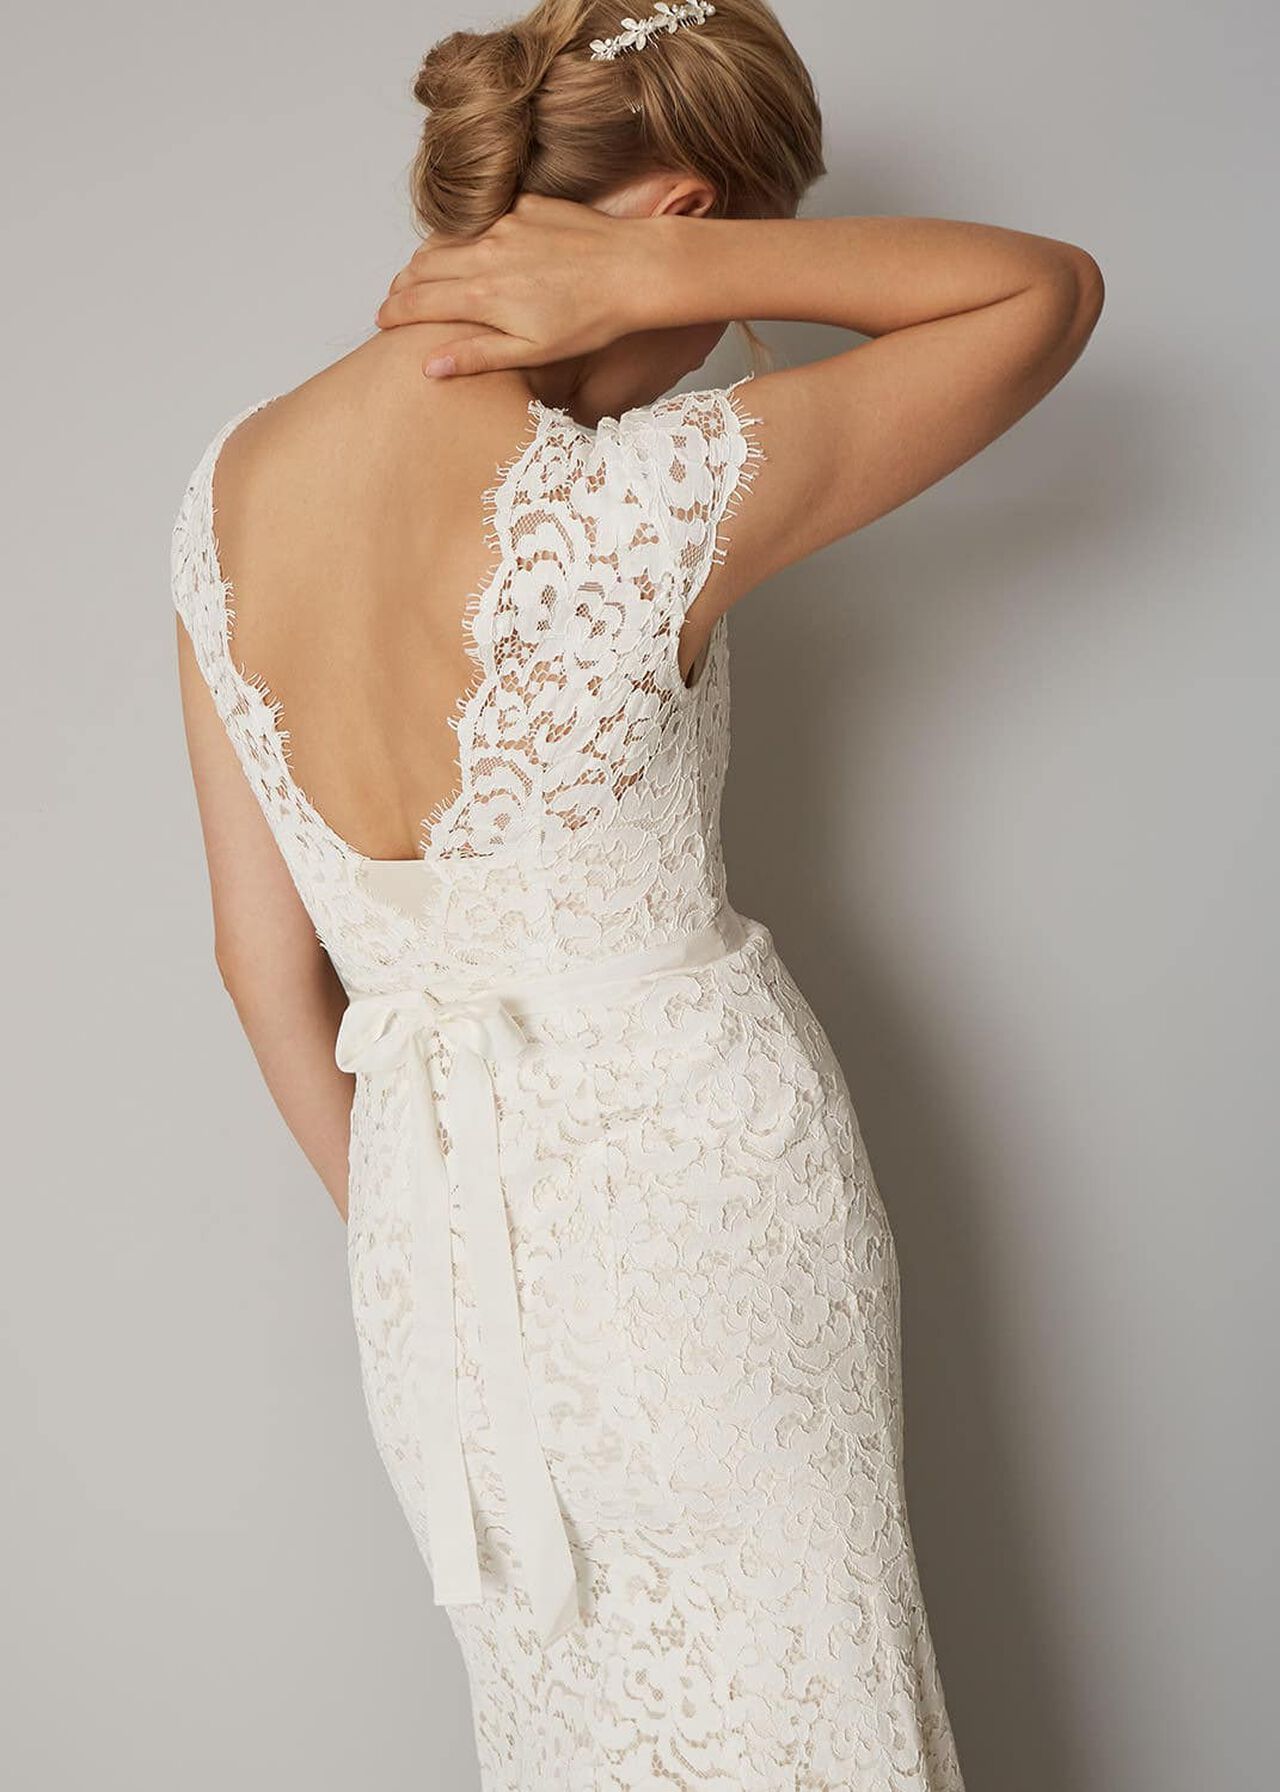 Maegen Lace Wedding Dress